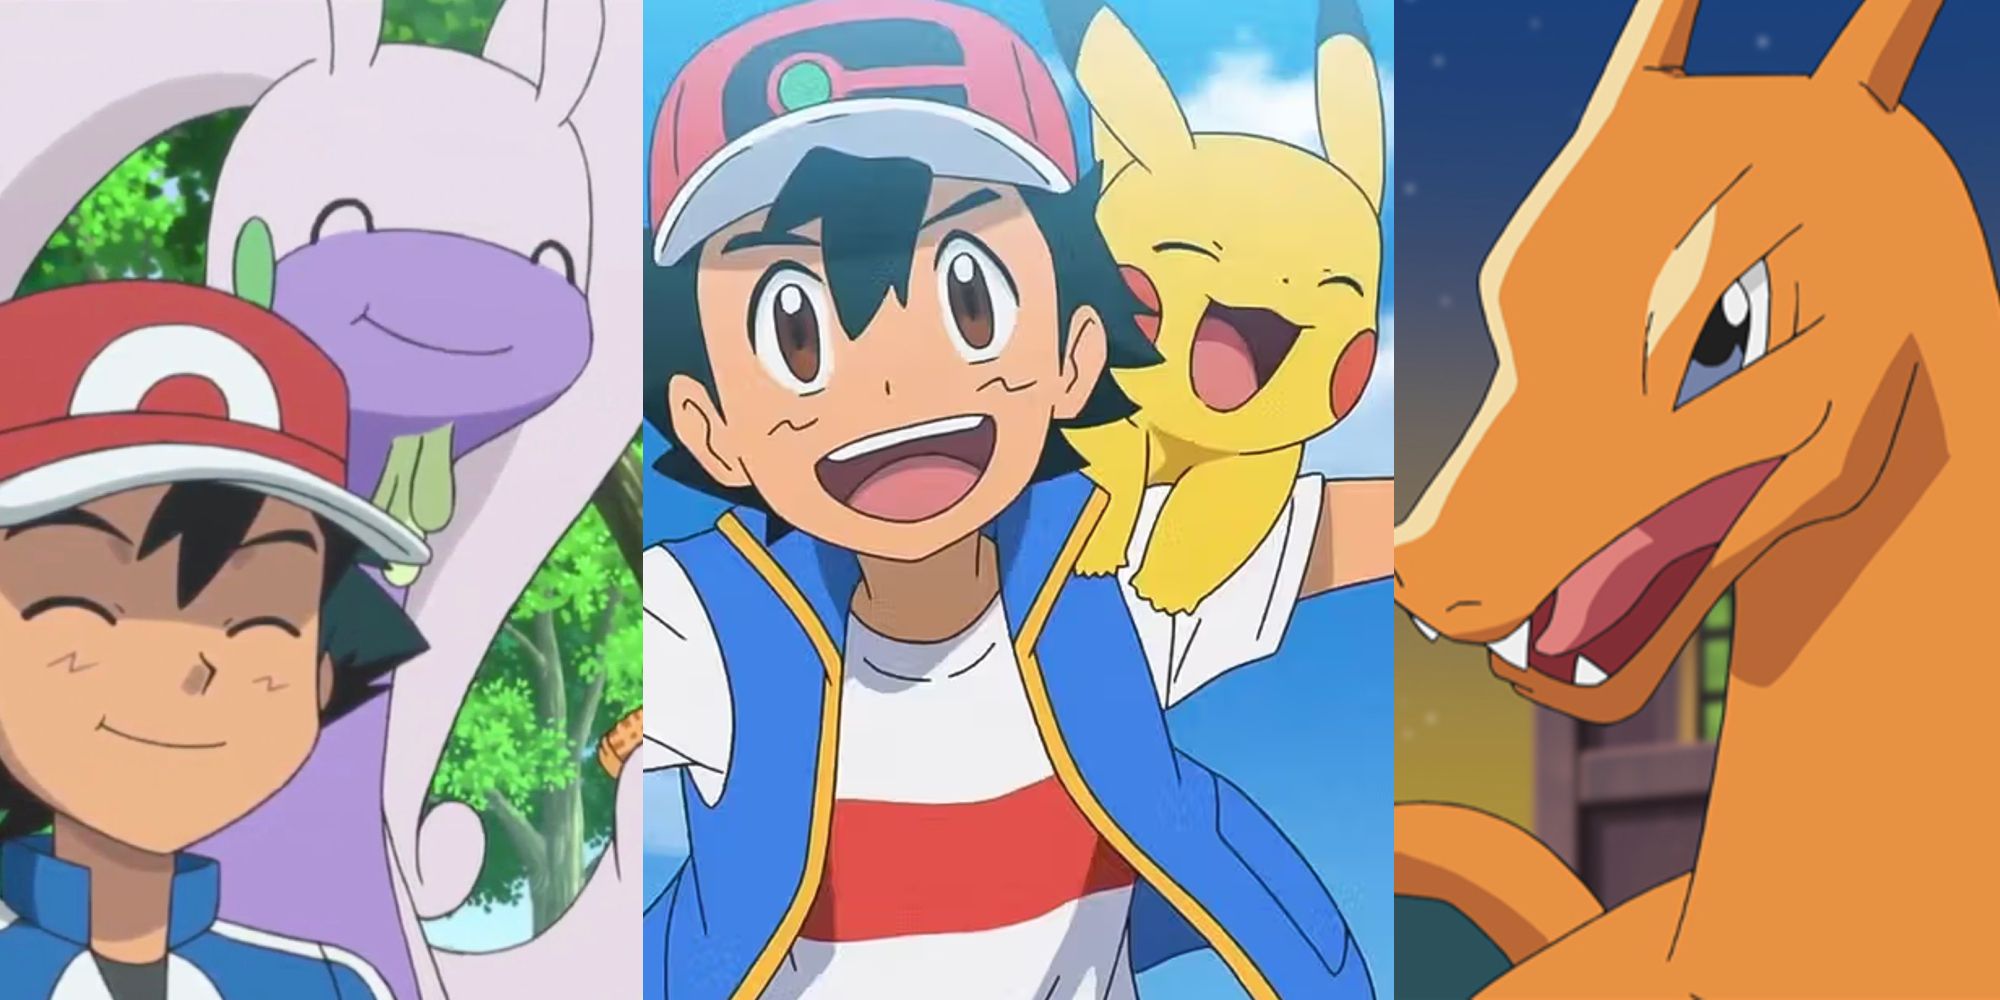 Ash and Goodra smiling; Ash running with Pikachu; Ash's Charizard